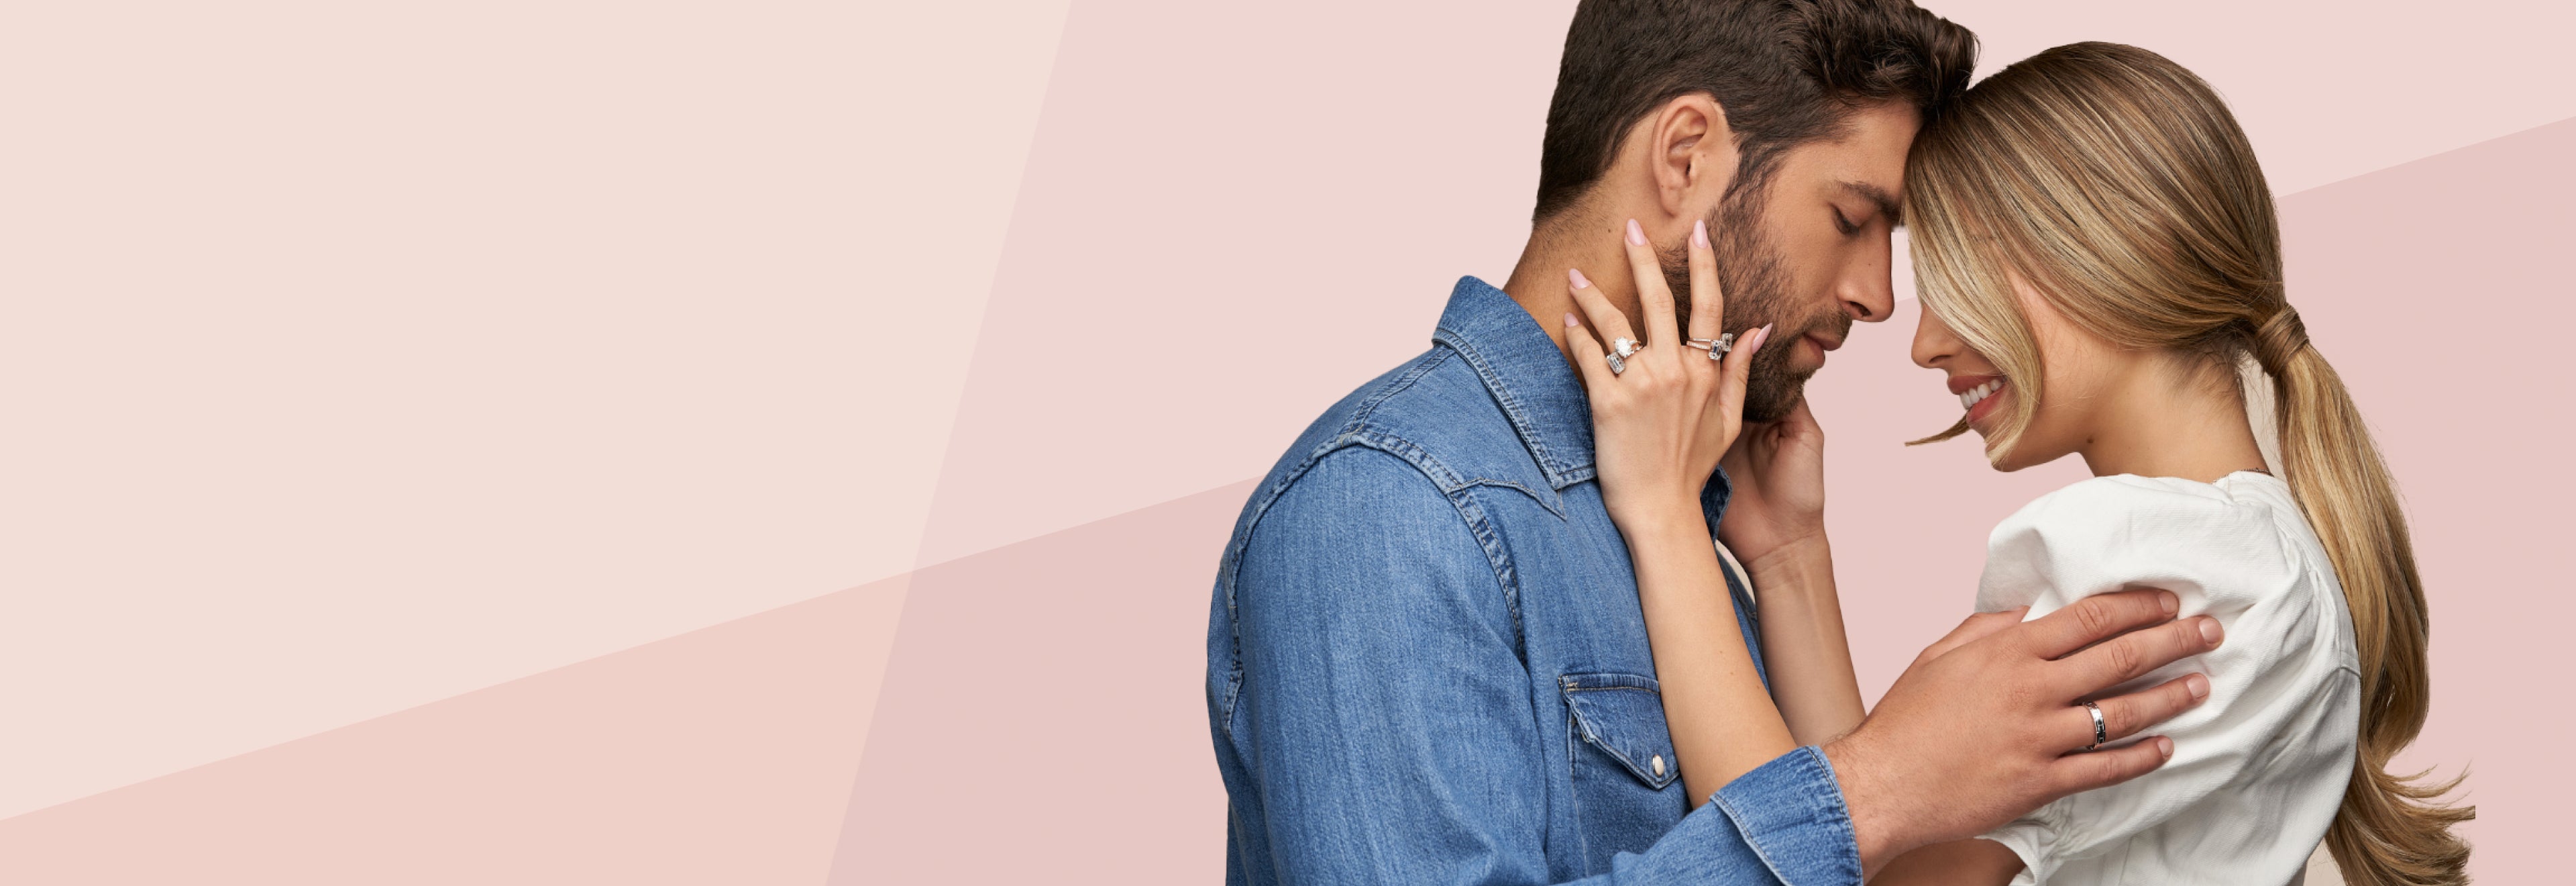 Engagement rings banner desktop image